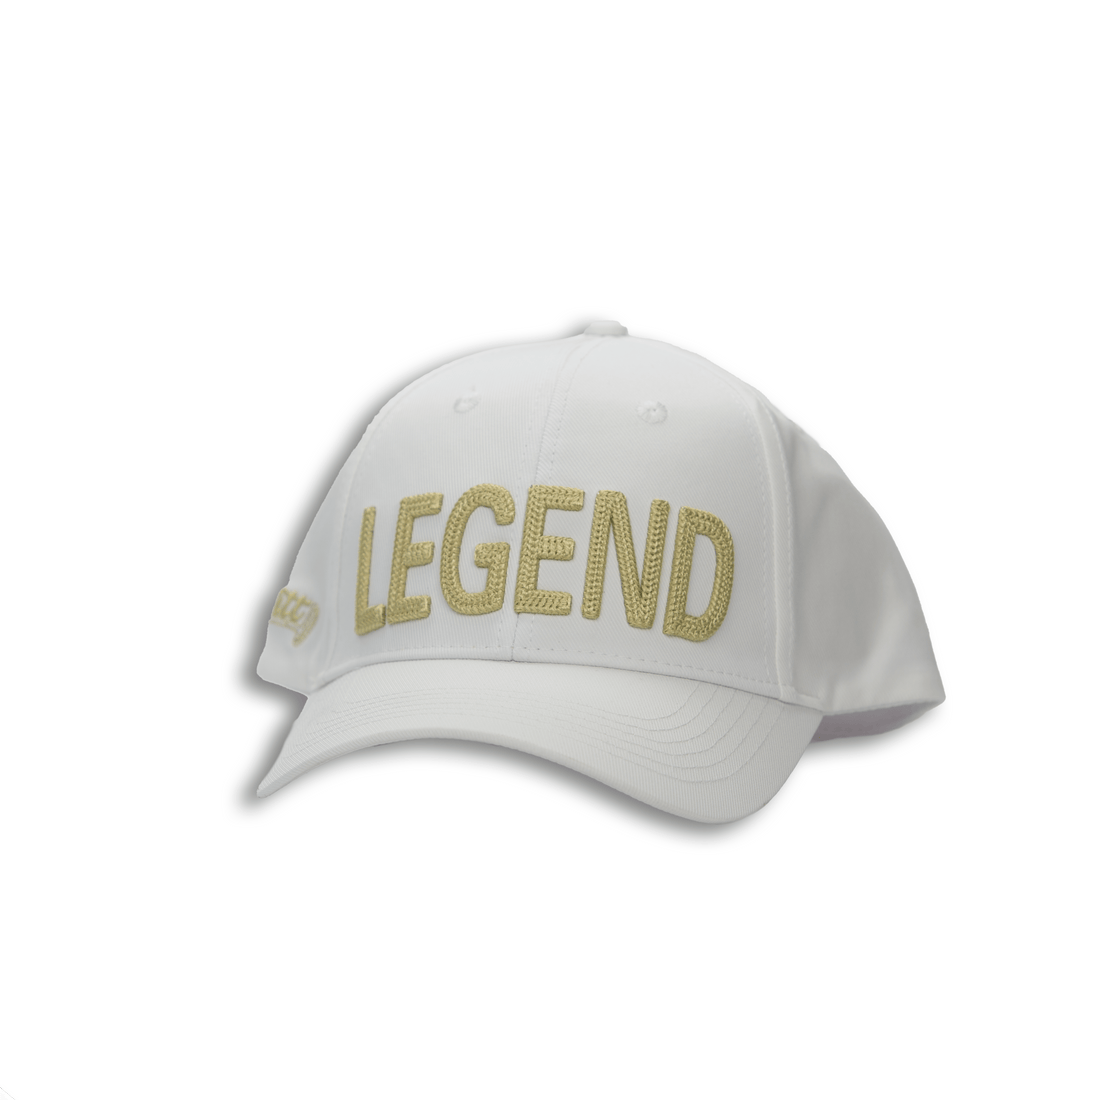 LEGEND Hat - 2putt